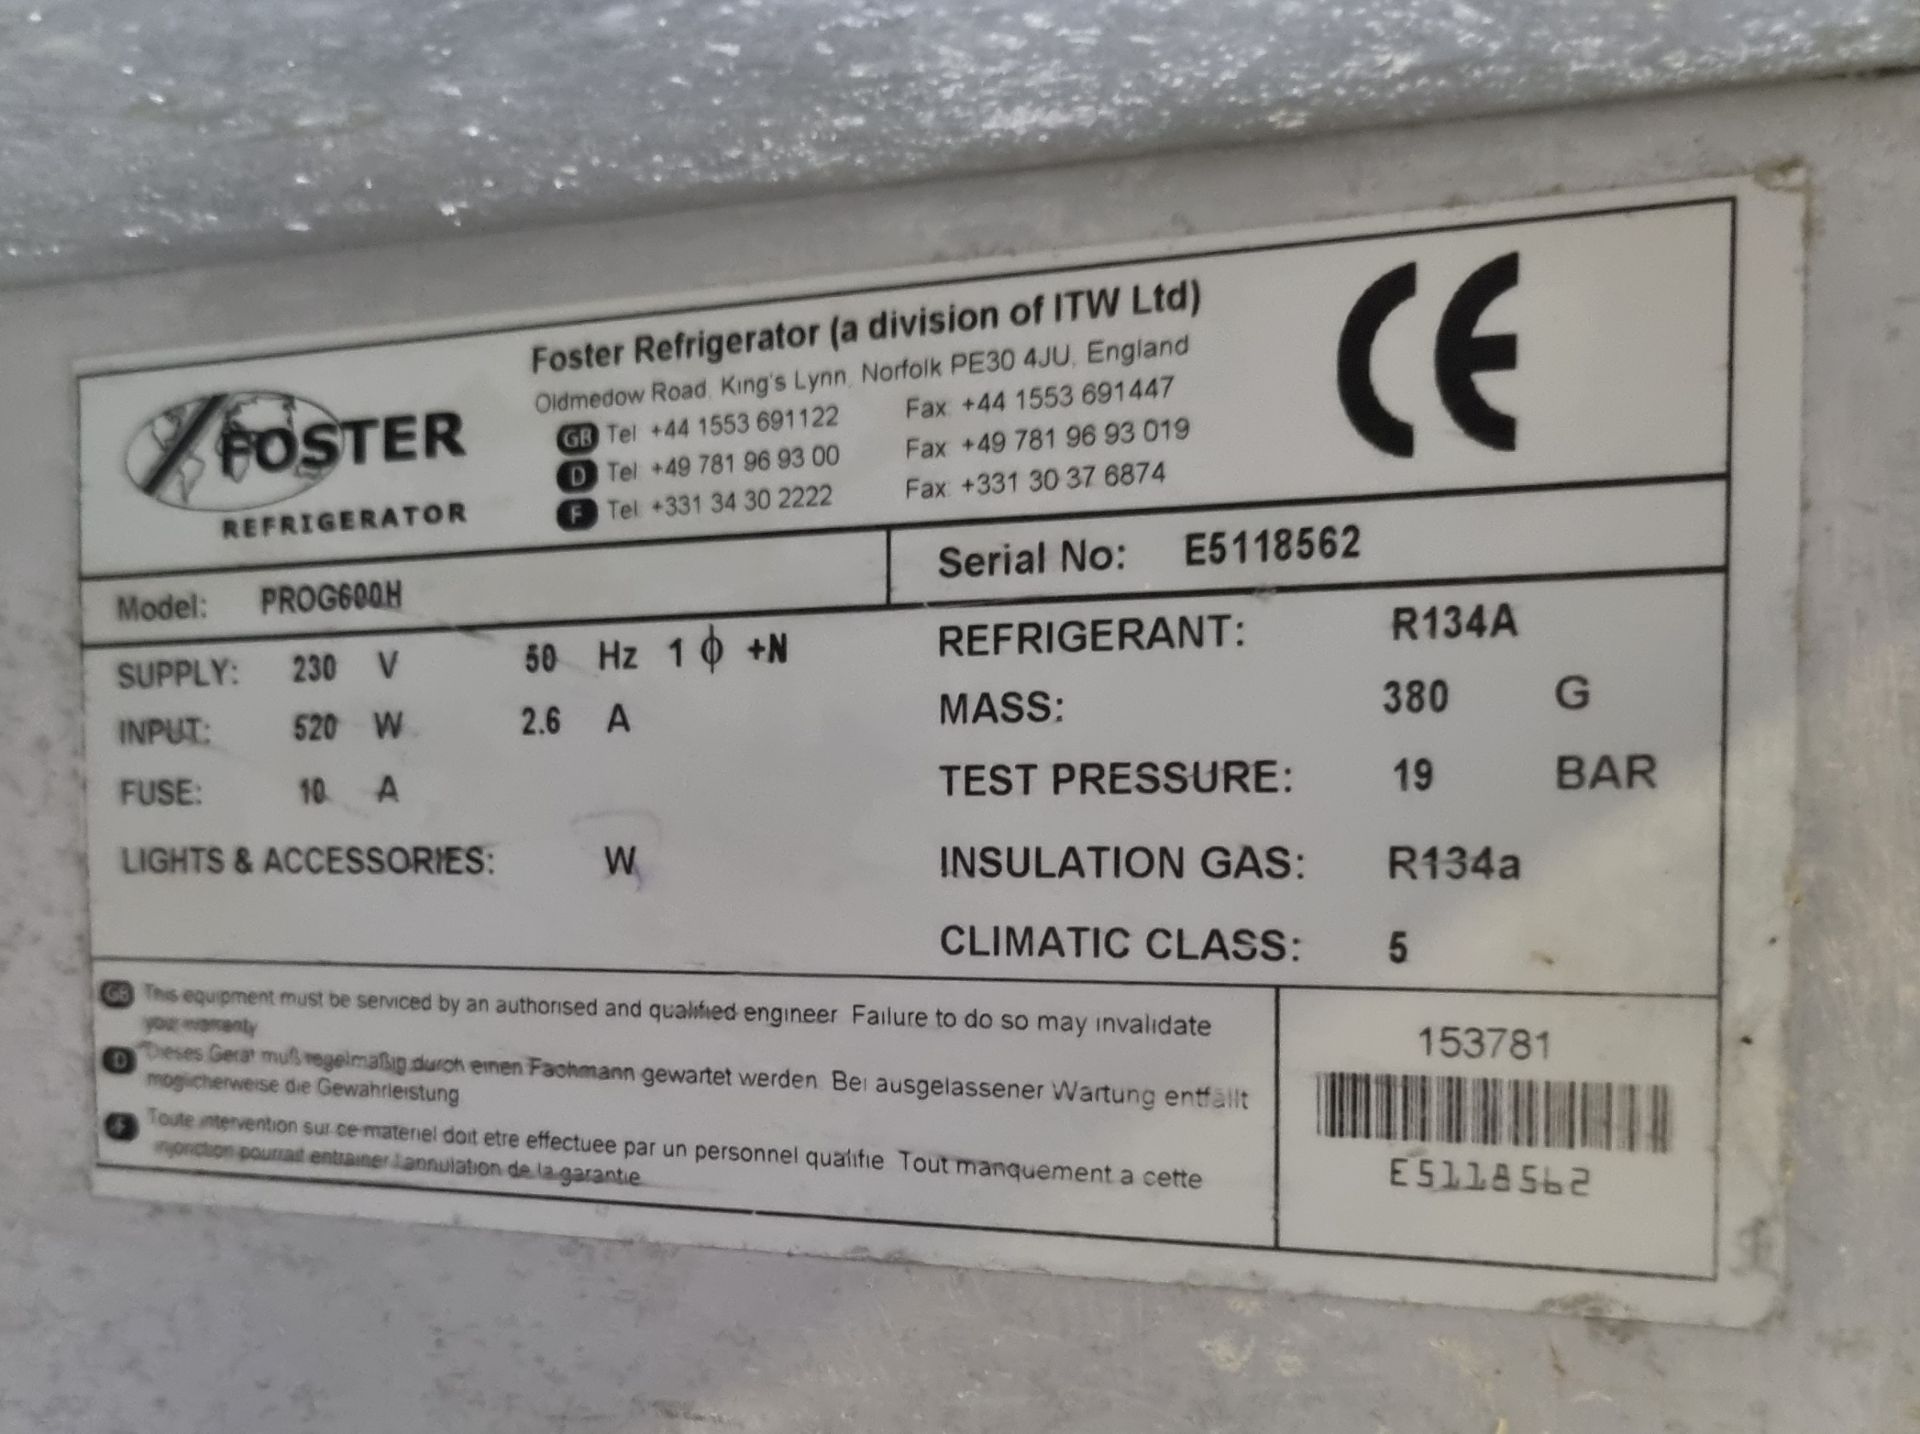 Foster PROG600H stainless steel single door upright fridge - W 705 x D 825 x H 2080mm - Image 4 of 5